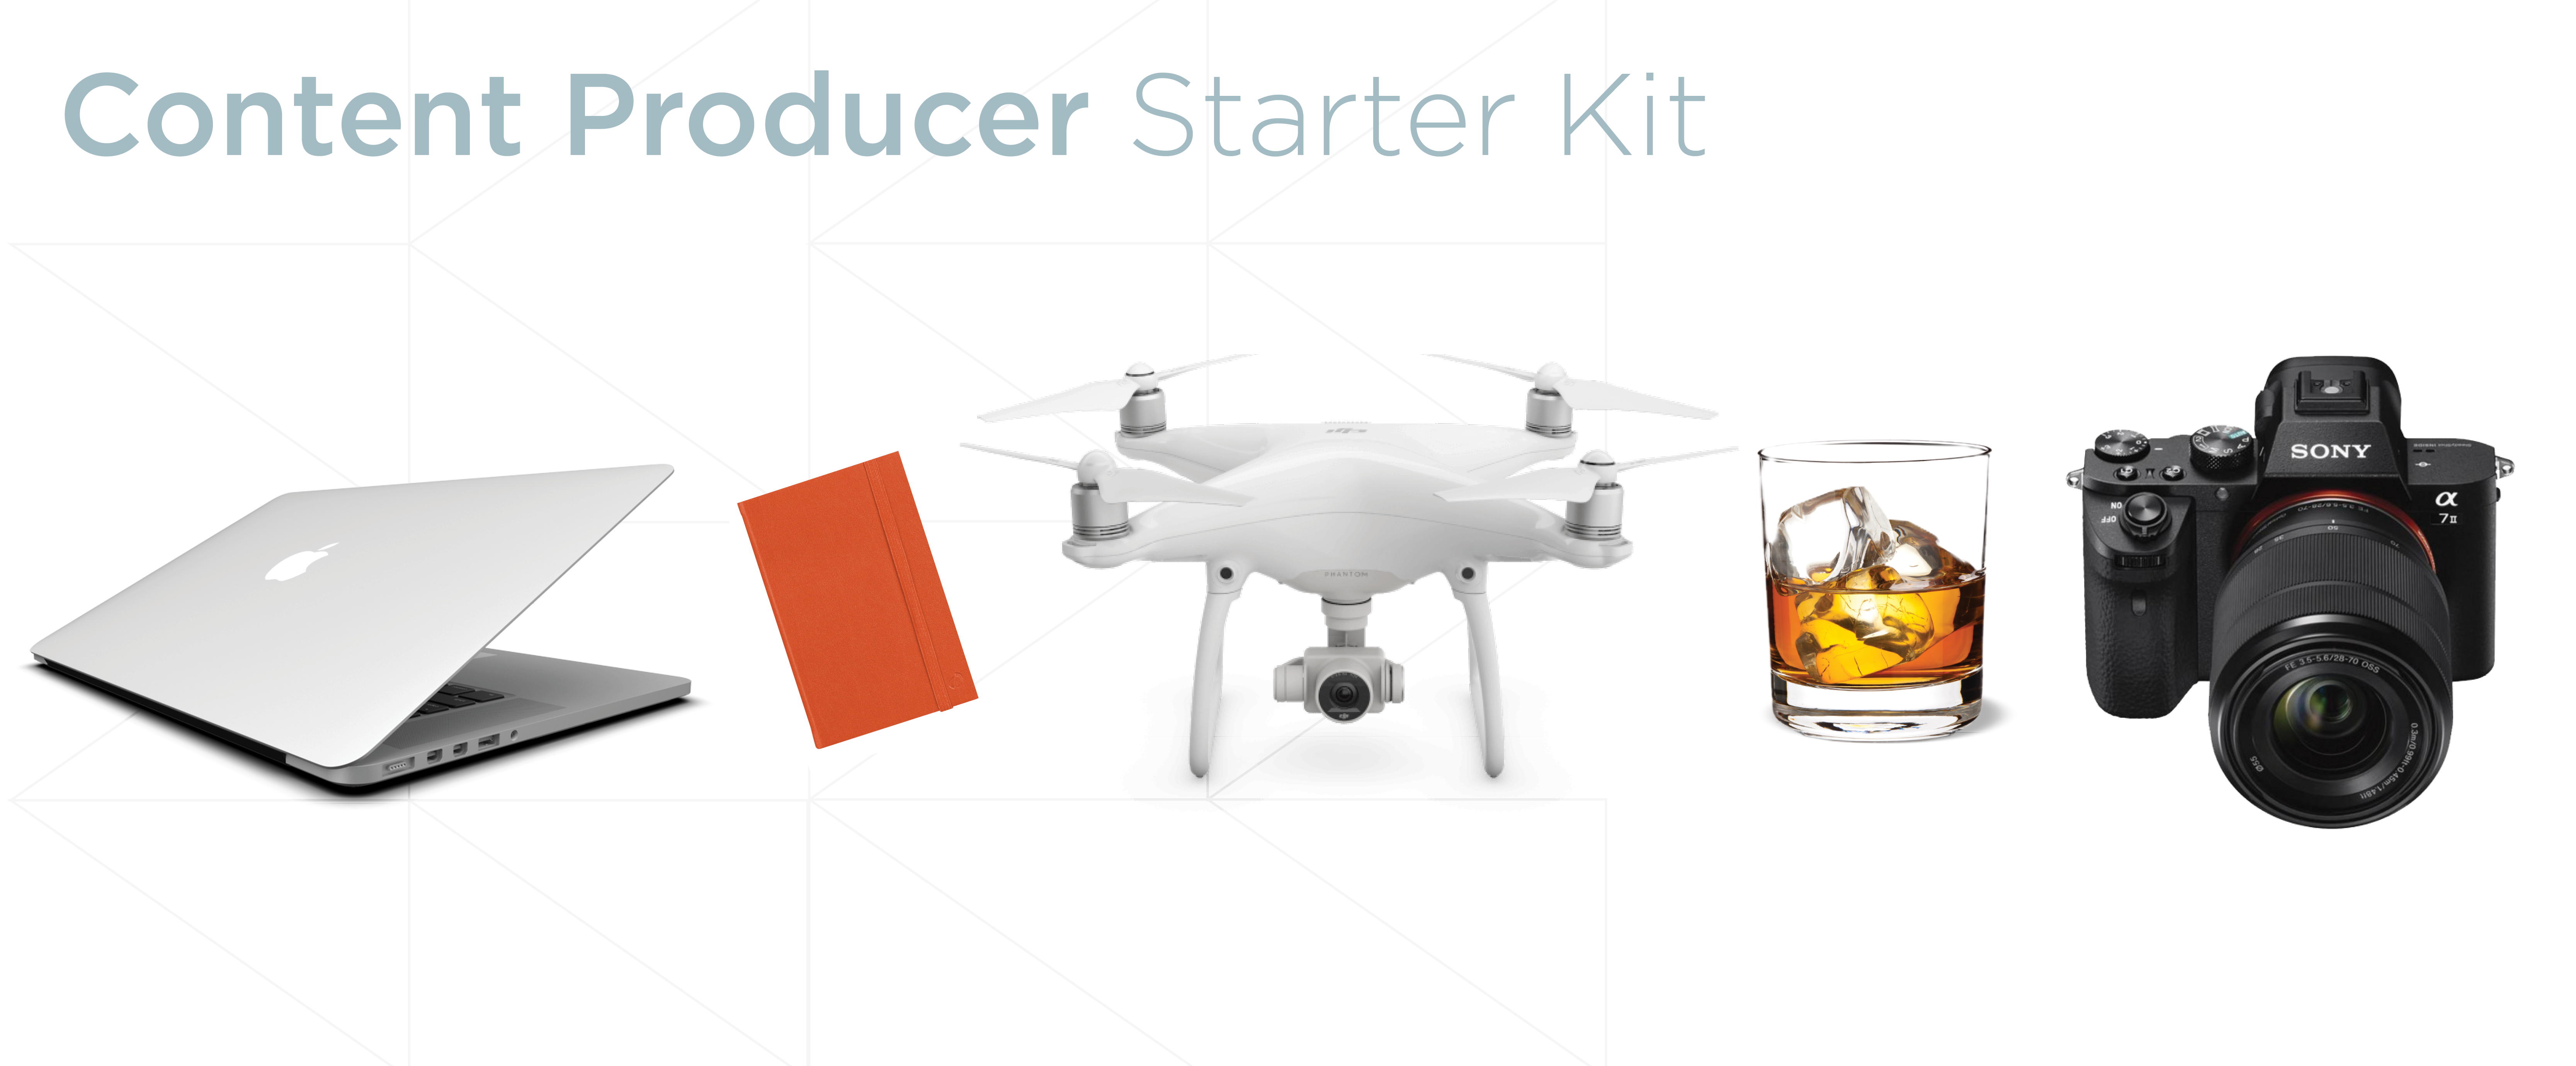 content-producer-starter-kit-camera-drone-laptop